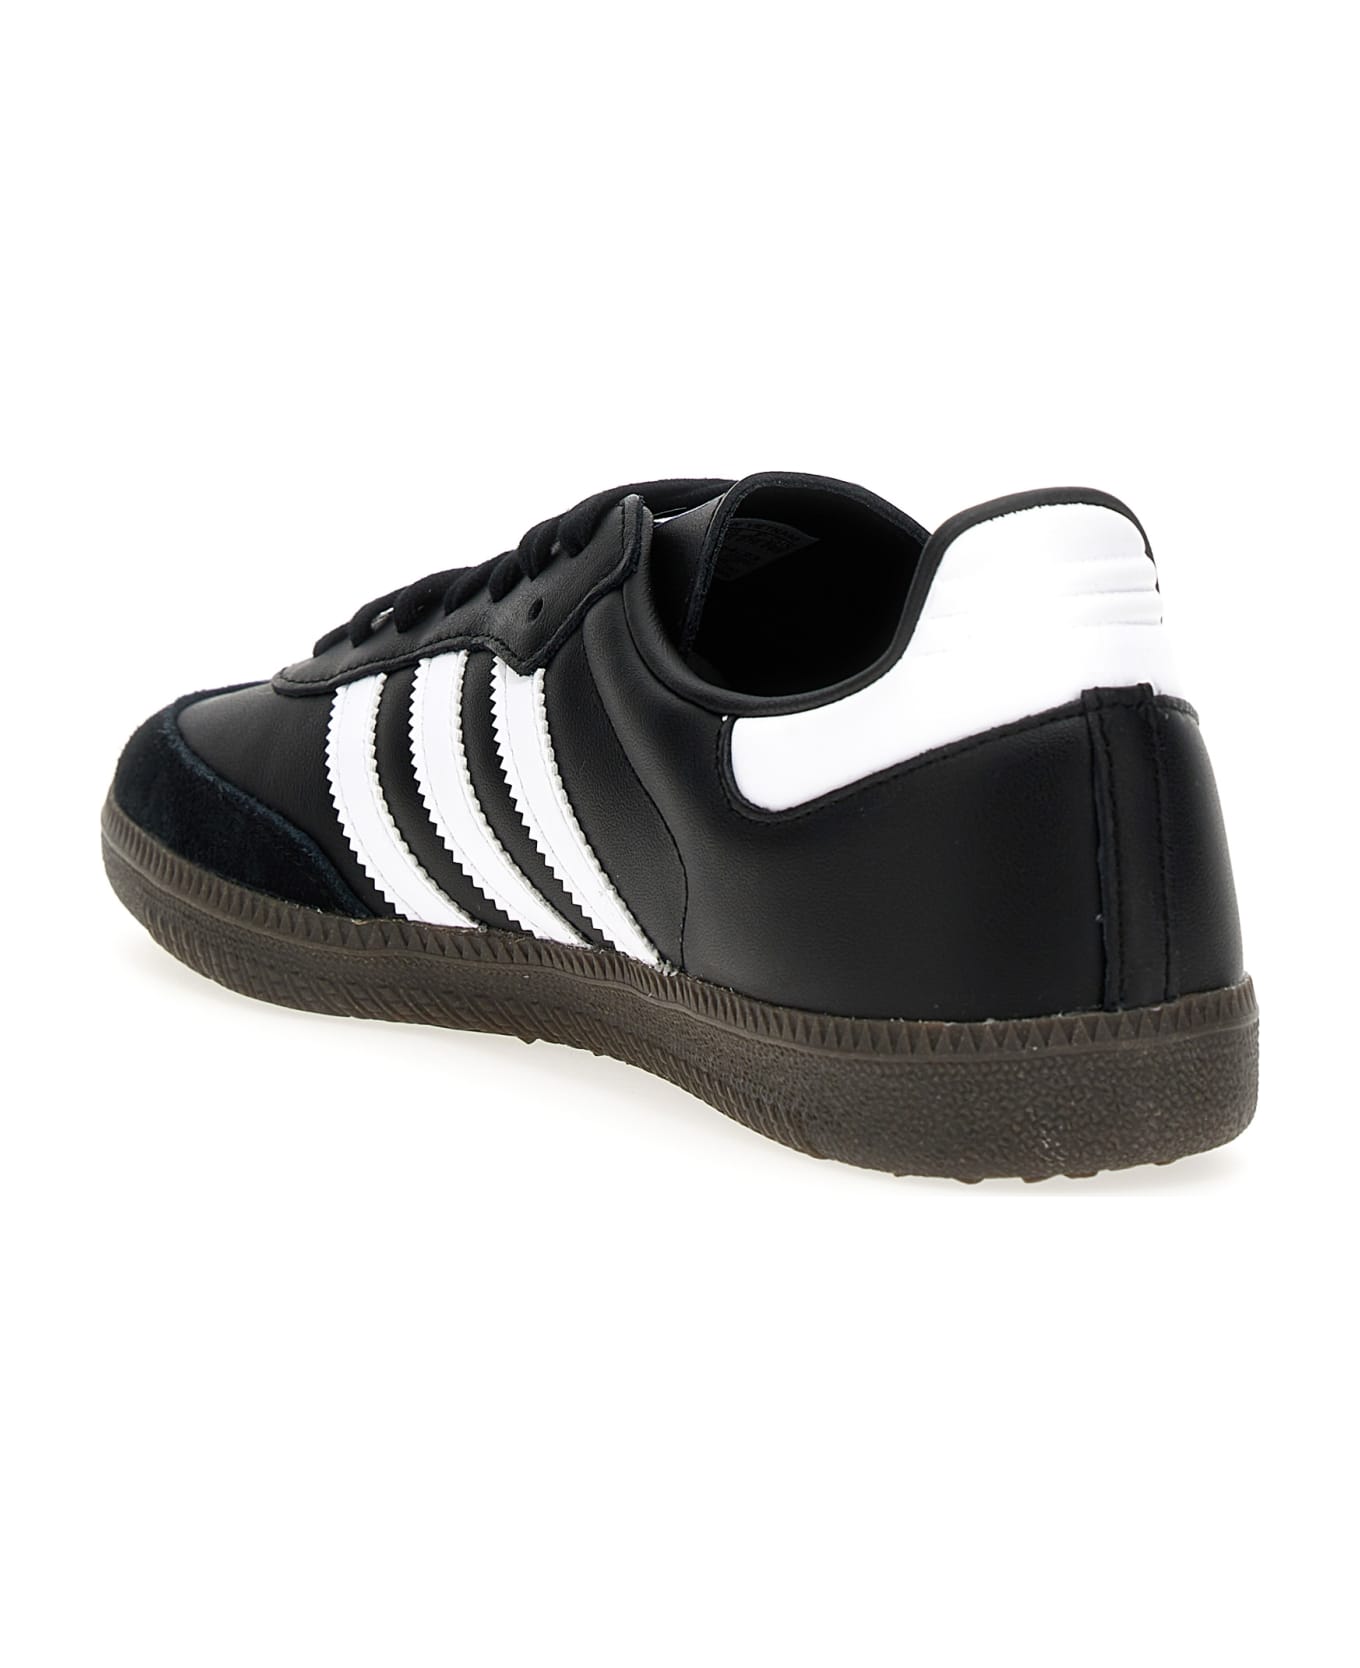 Adidas Originals Samba Og Sneakers - Black